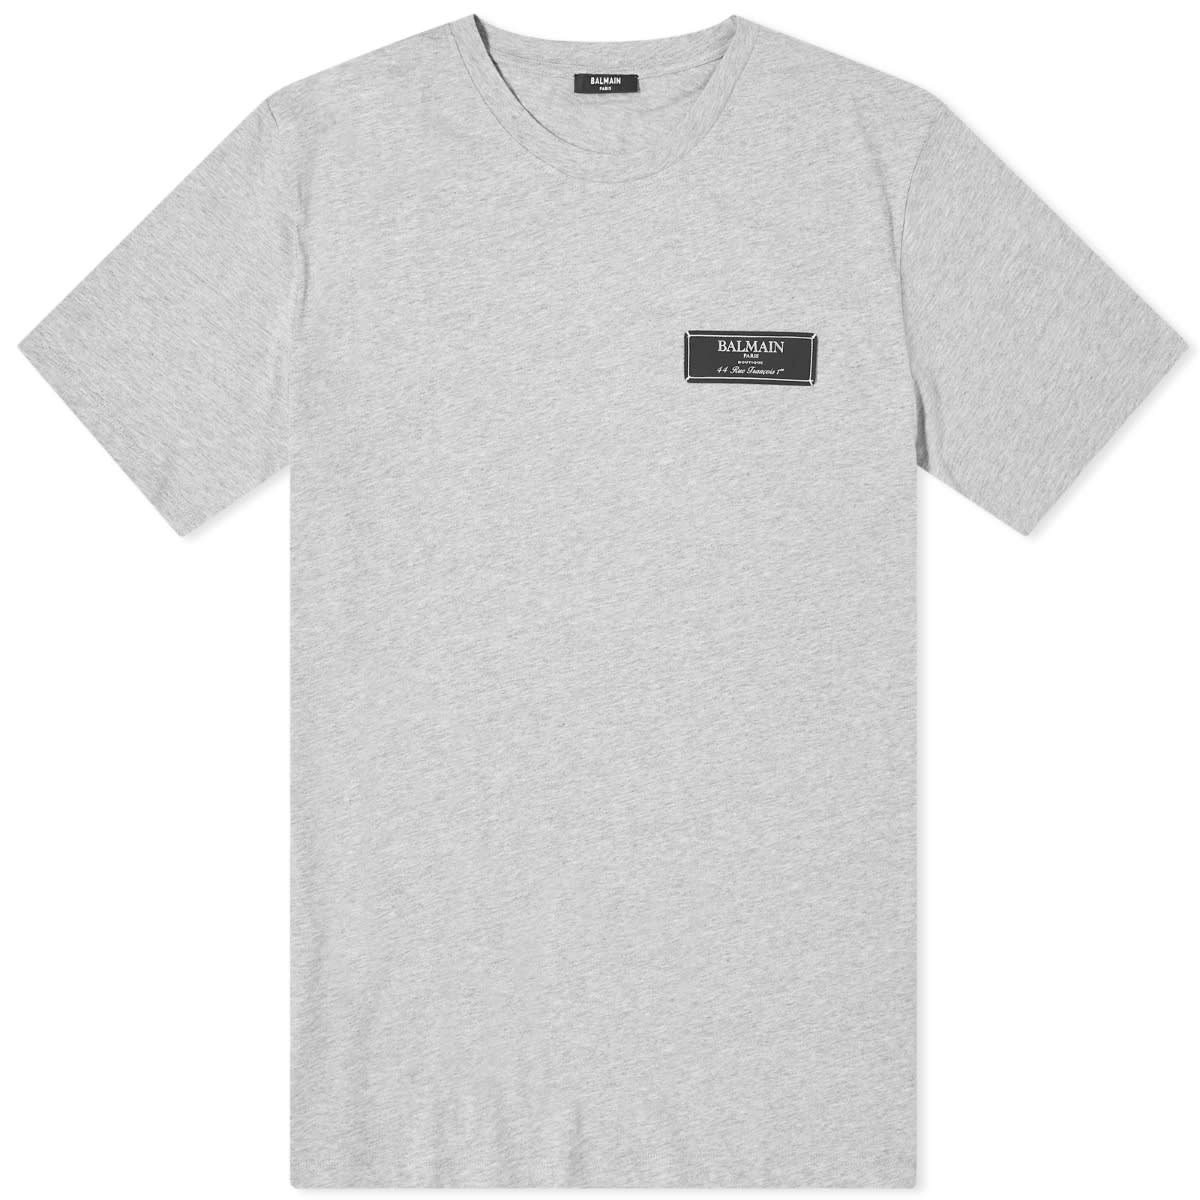 Balmain Label T-Shirt - 1